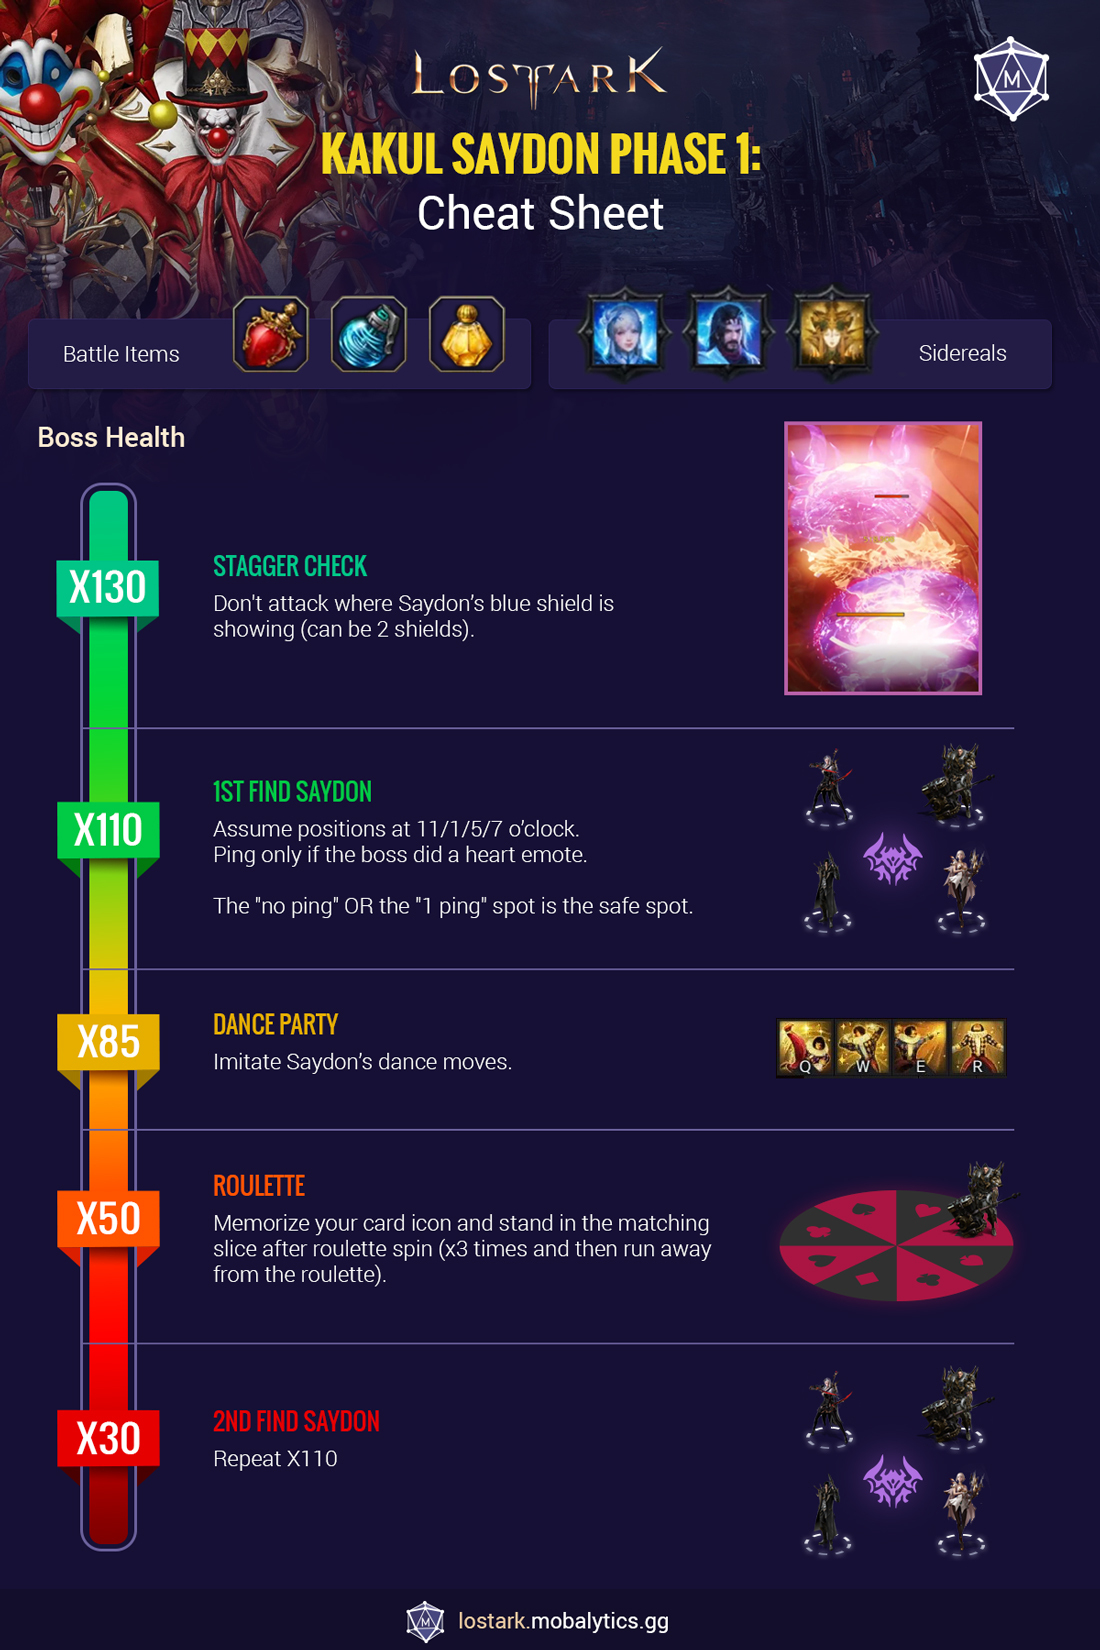 Kakul-Saydon Phase 1 Cheat Sheet infographic